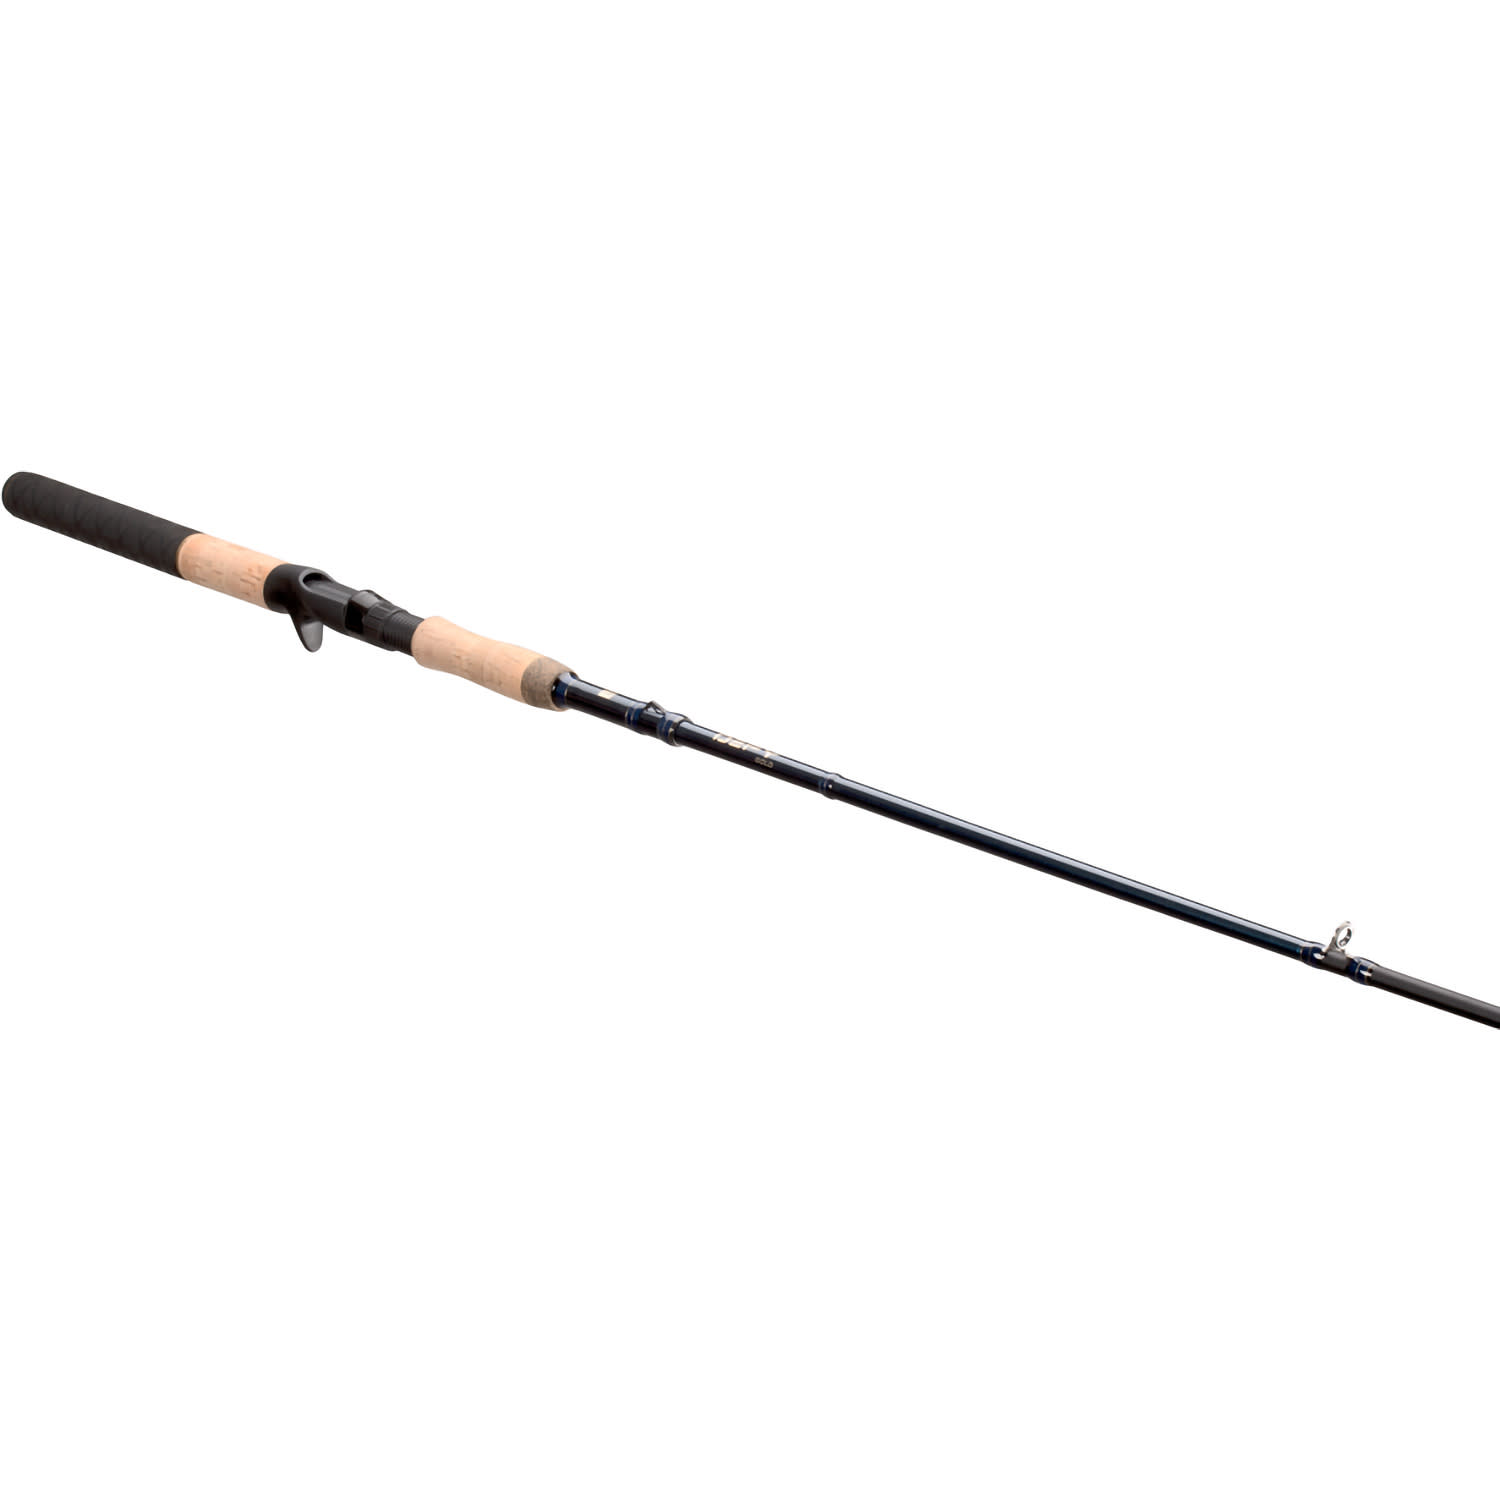 Trolling Fishing Rods: Best Downrigger & Boat Trolling Rods For